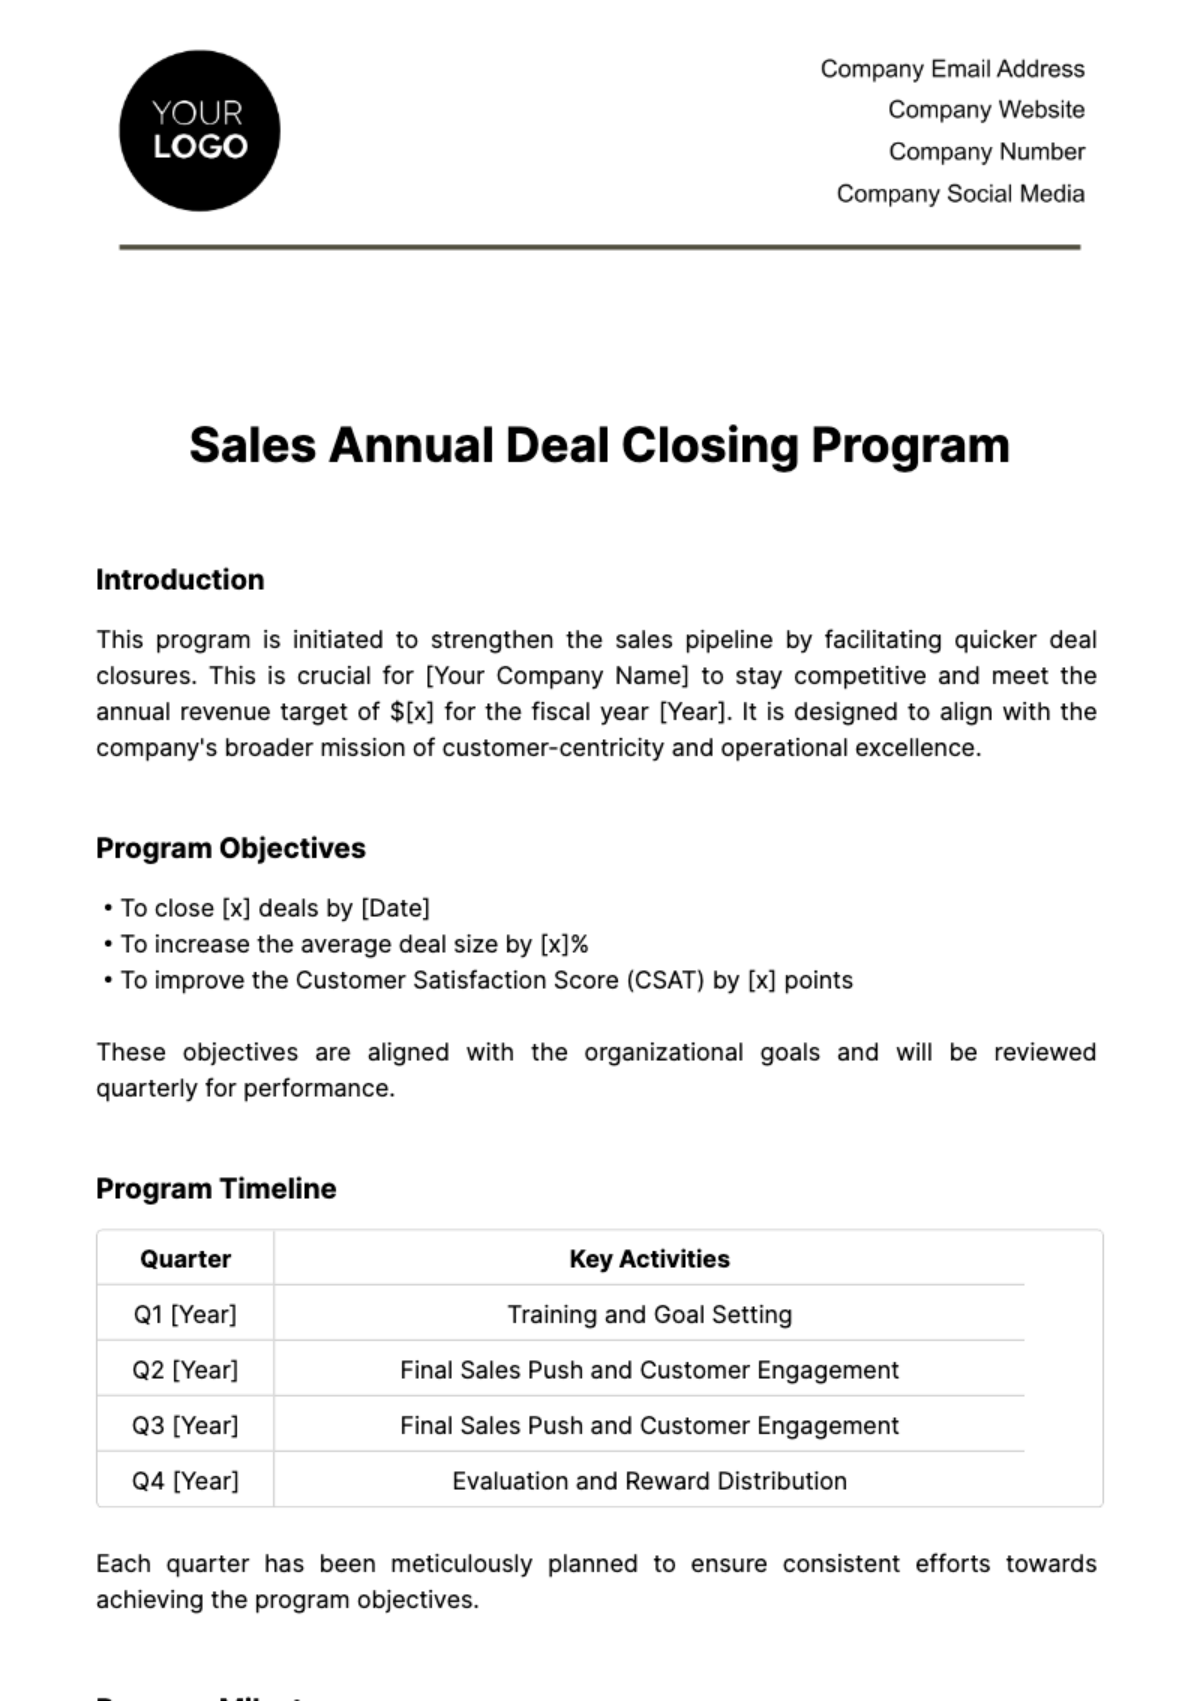 Sales Annual Deal Closing Program Template